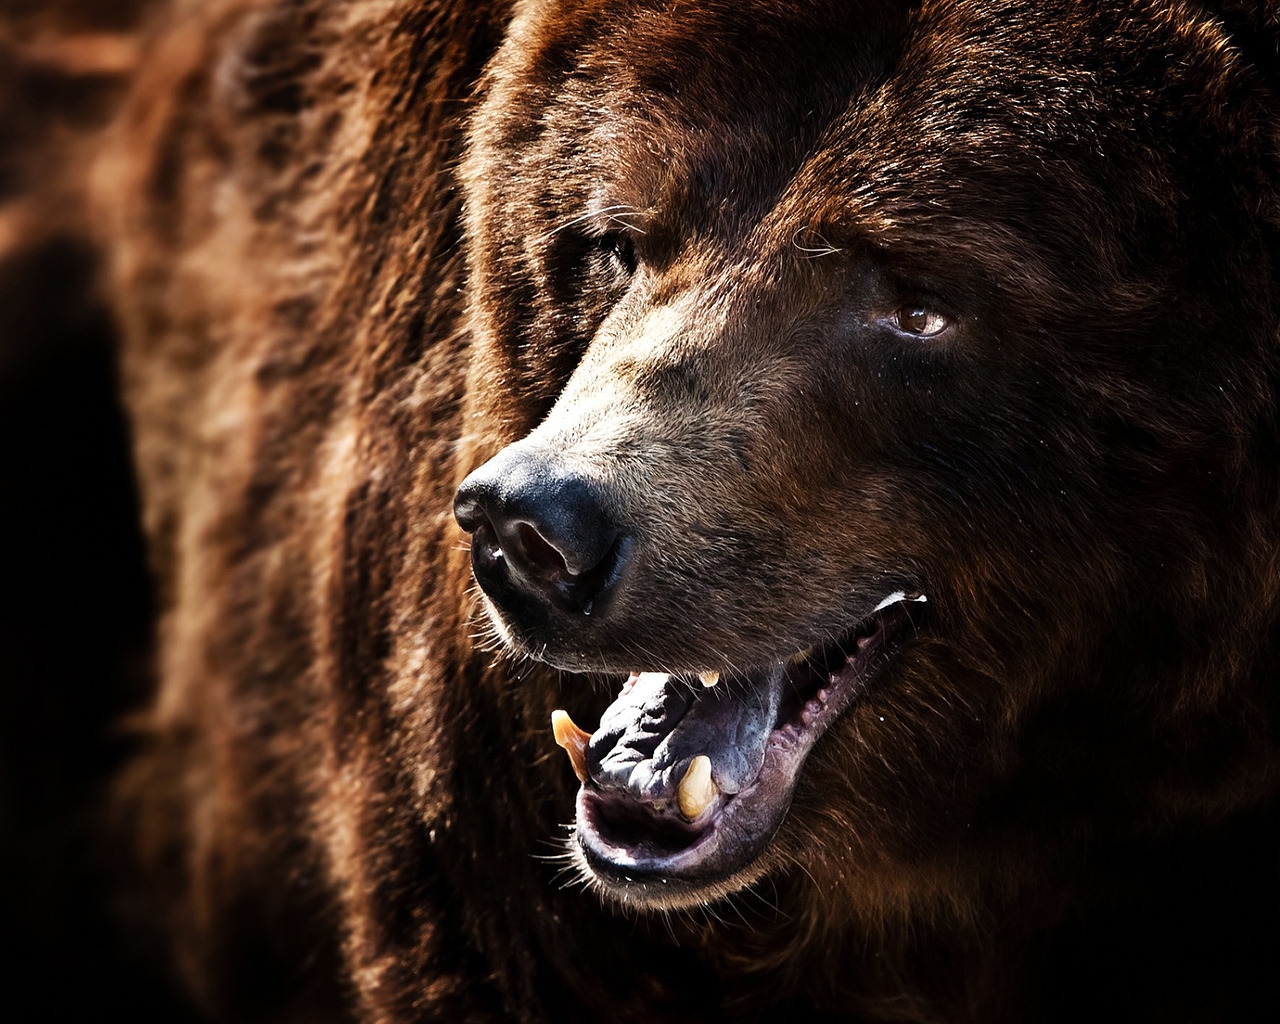 Big Brown Bear for 1280 x 1024 resolution